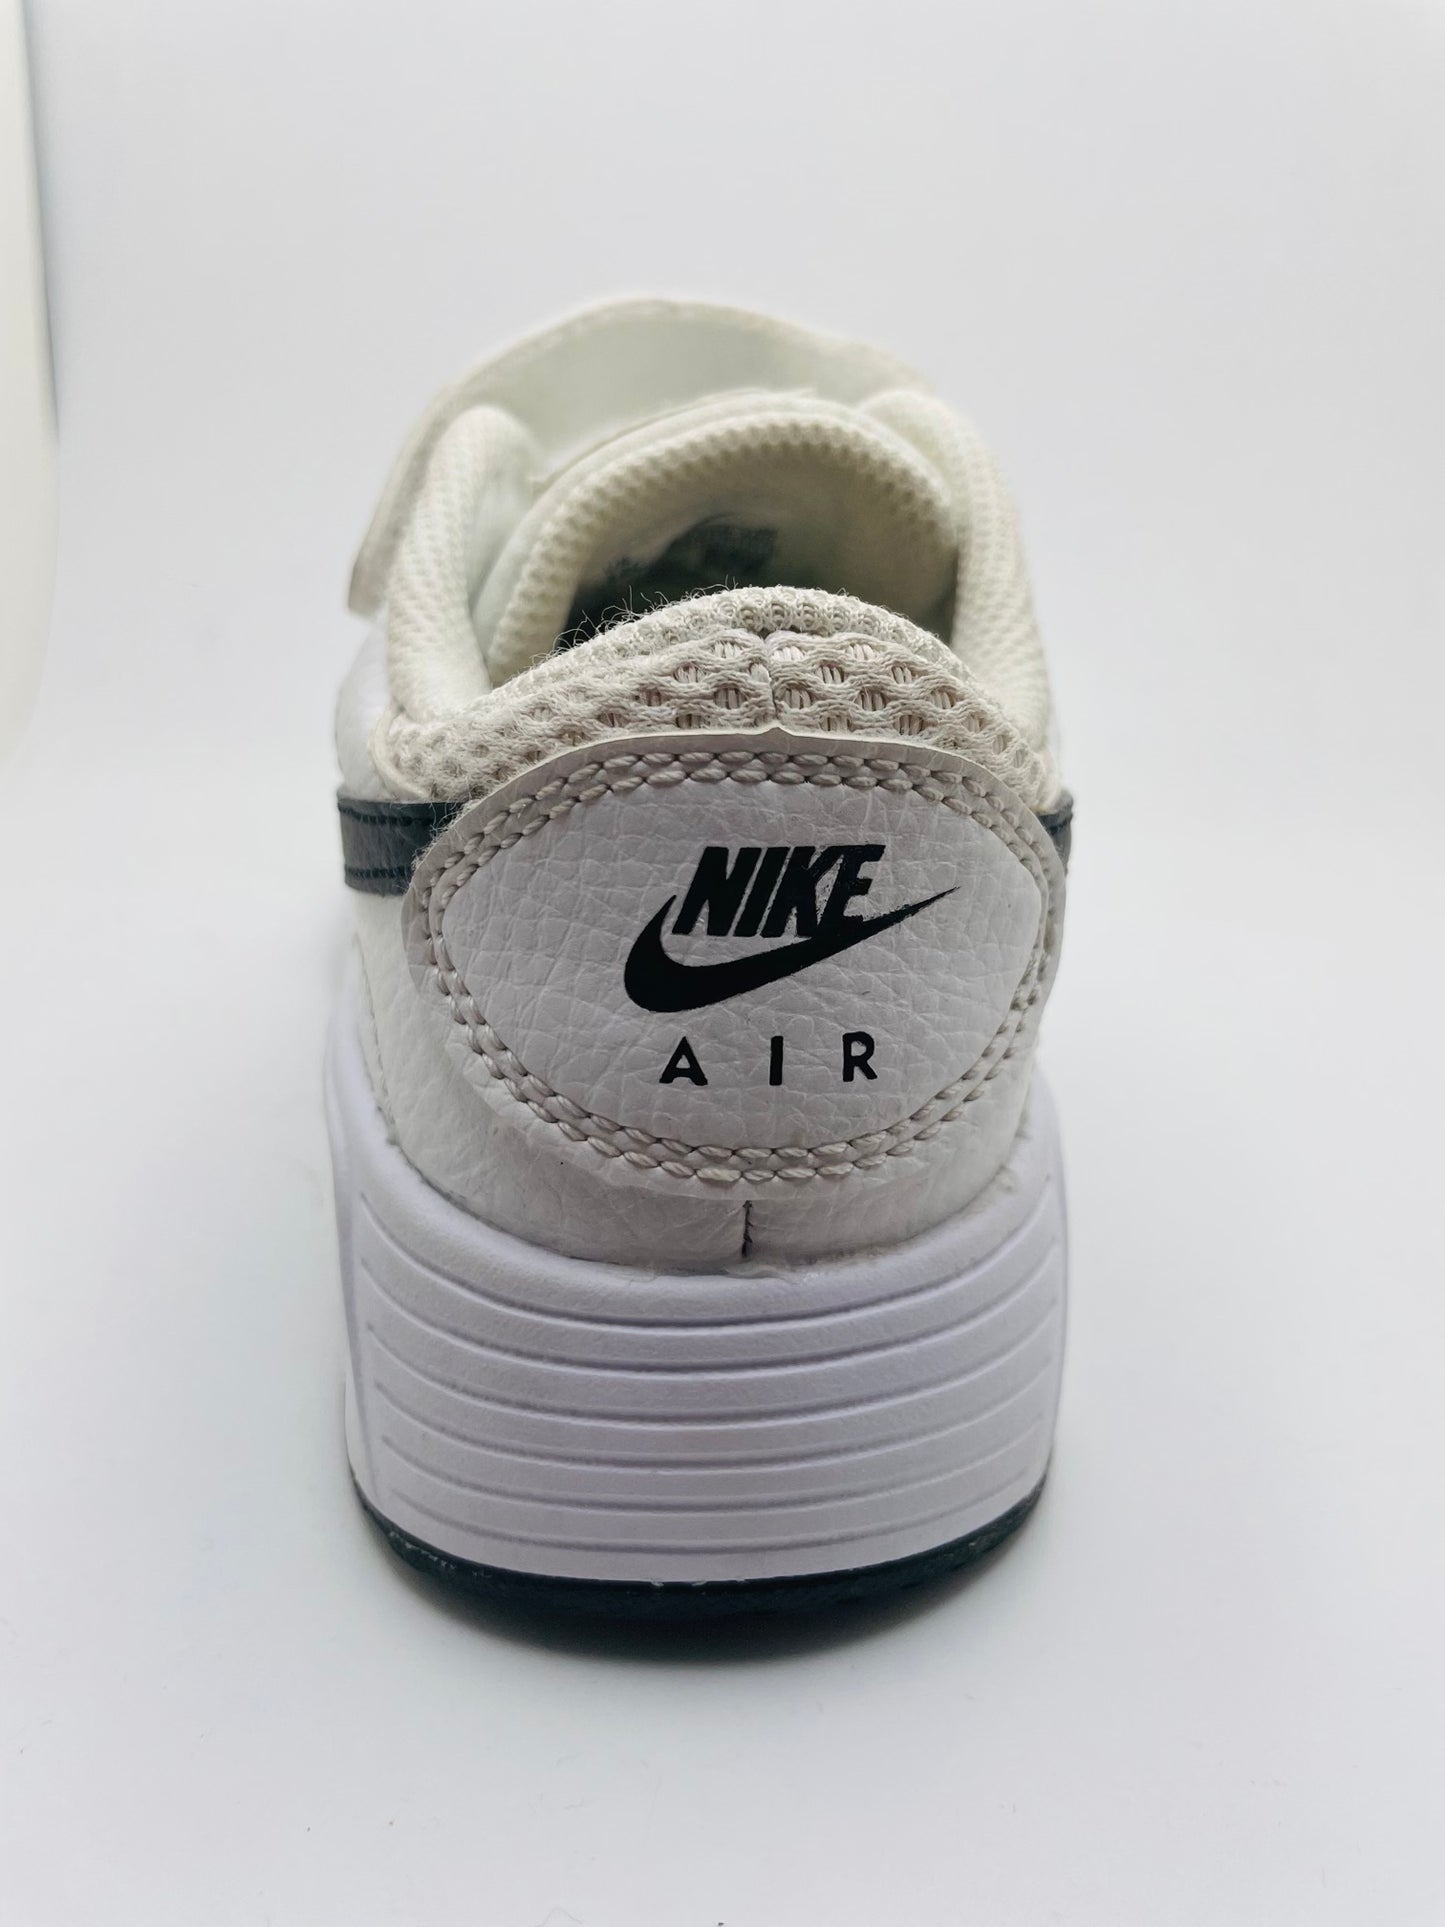 Nike sneakers for kids